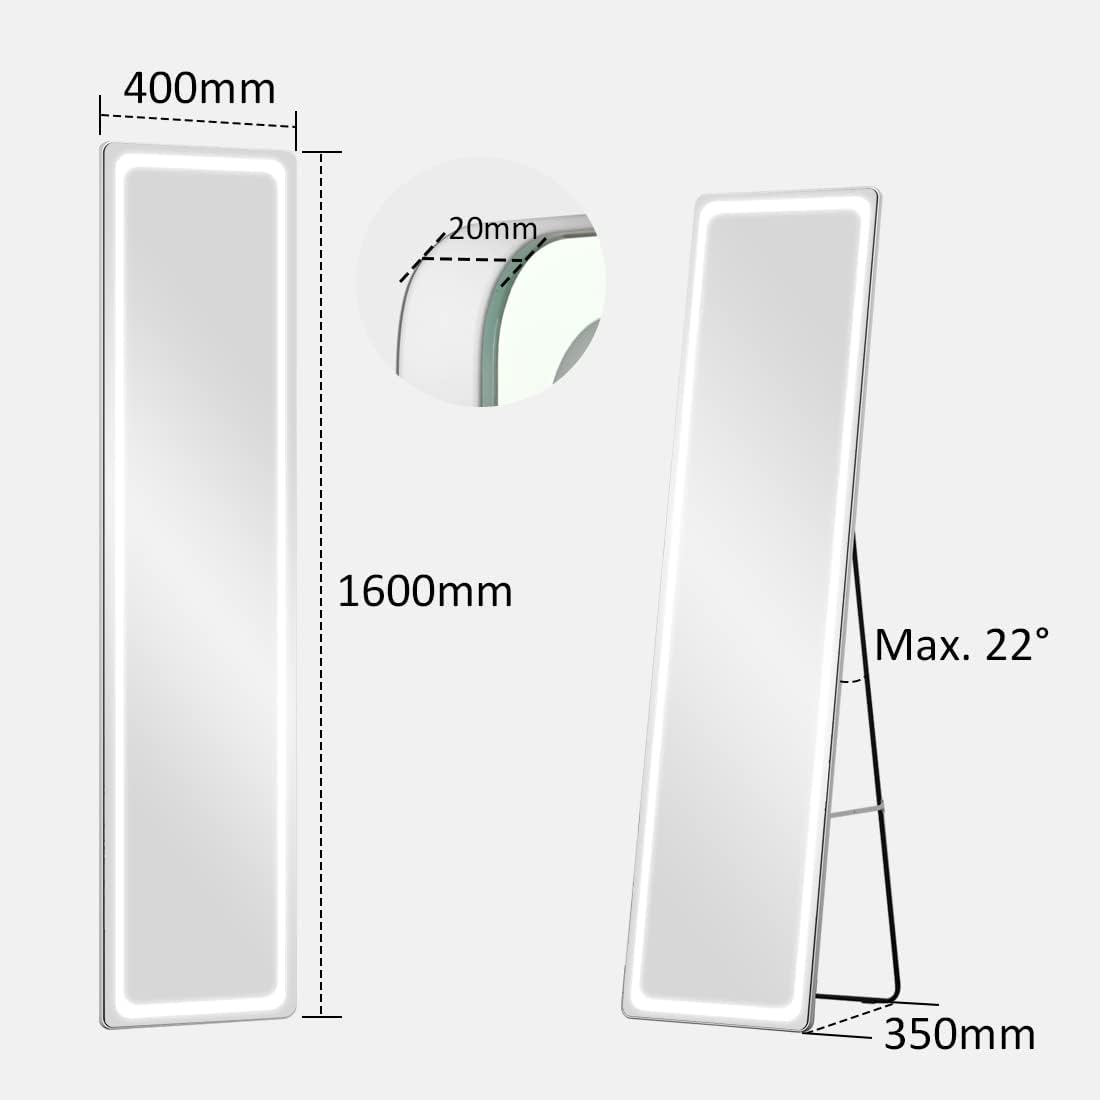 emke led full-length mirror ufm01bksw dimensions